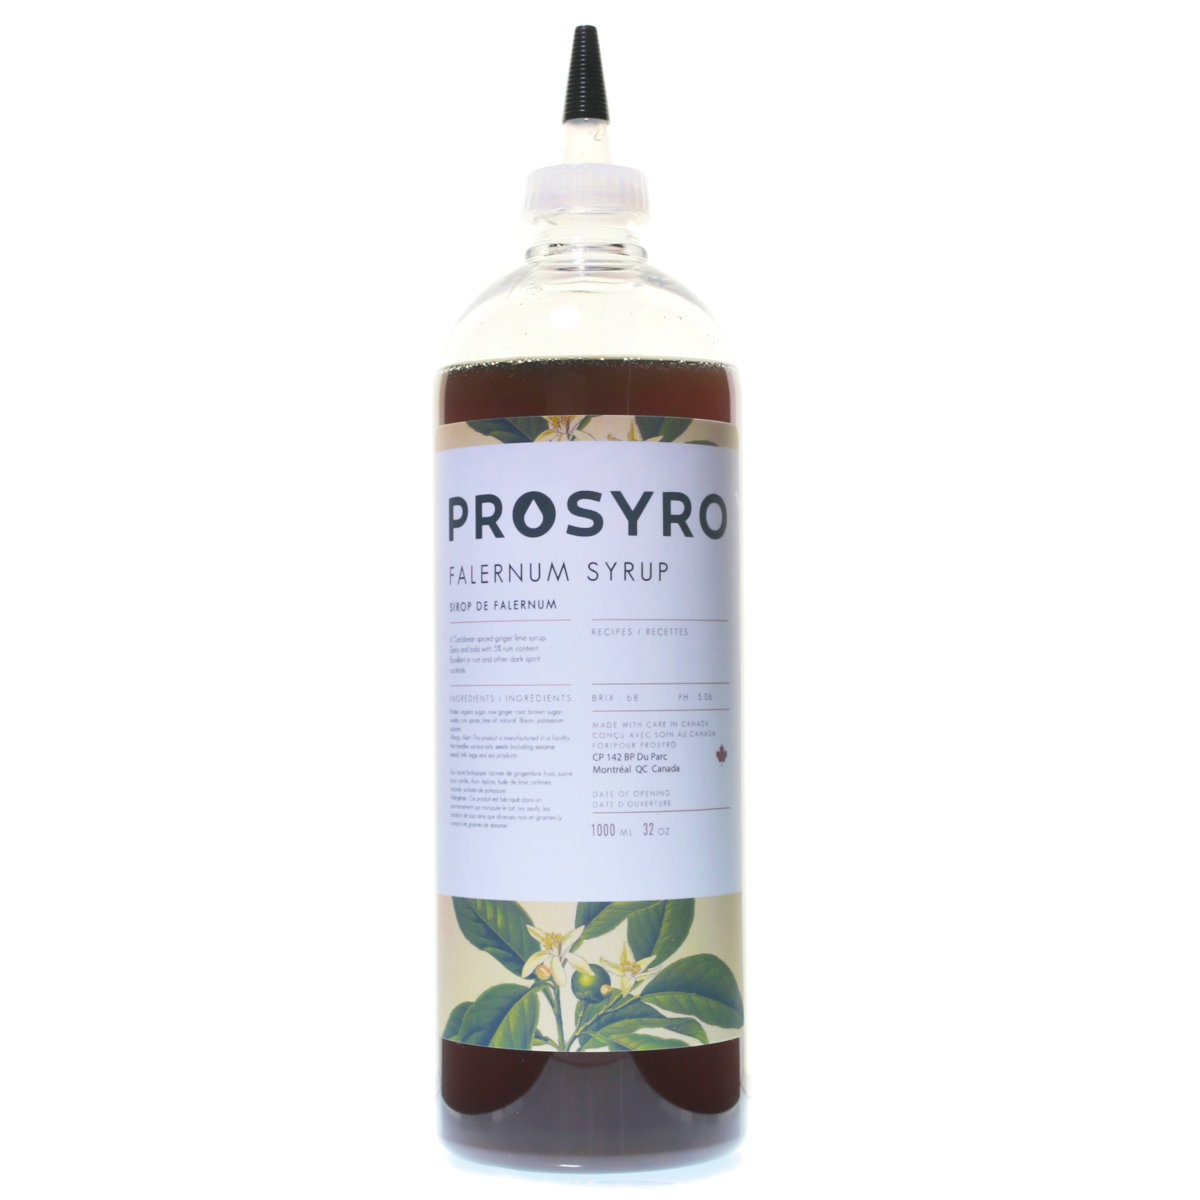 Sirop de pamplemousse - Prosyro » Vinum Design